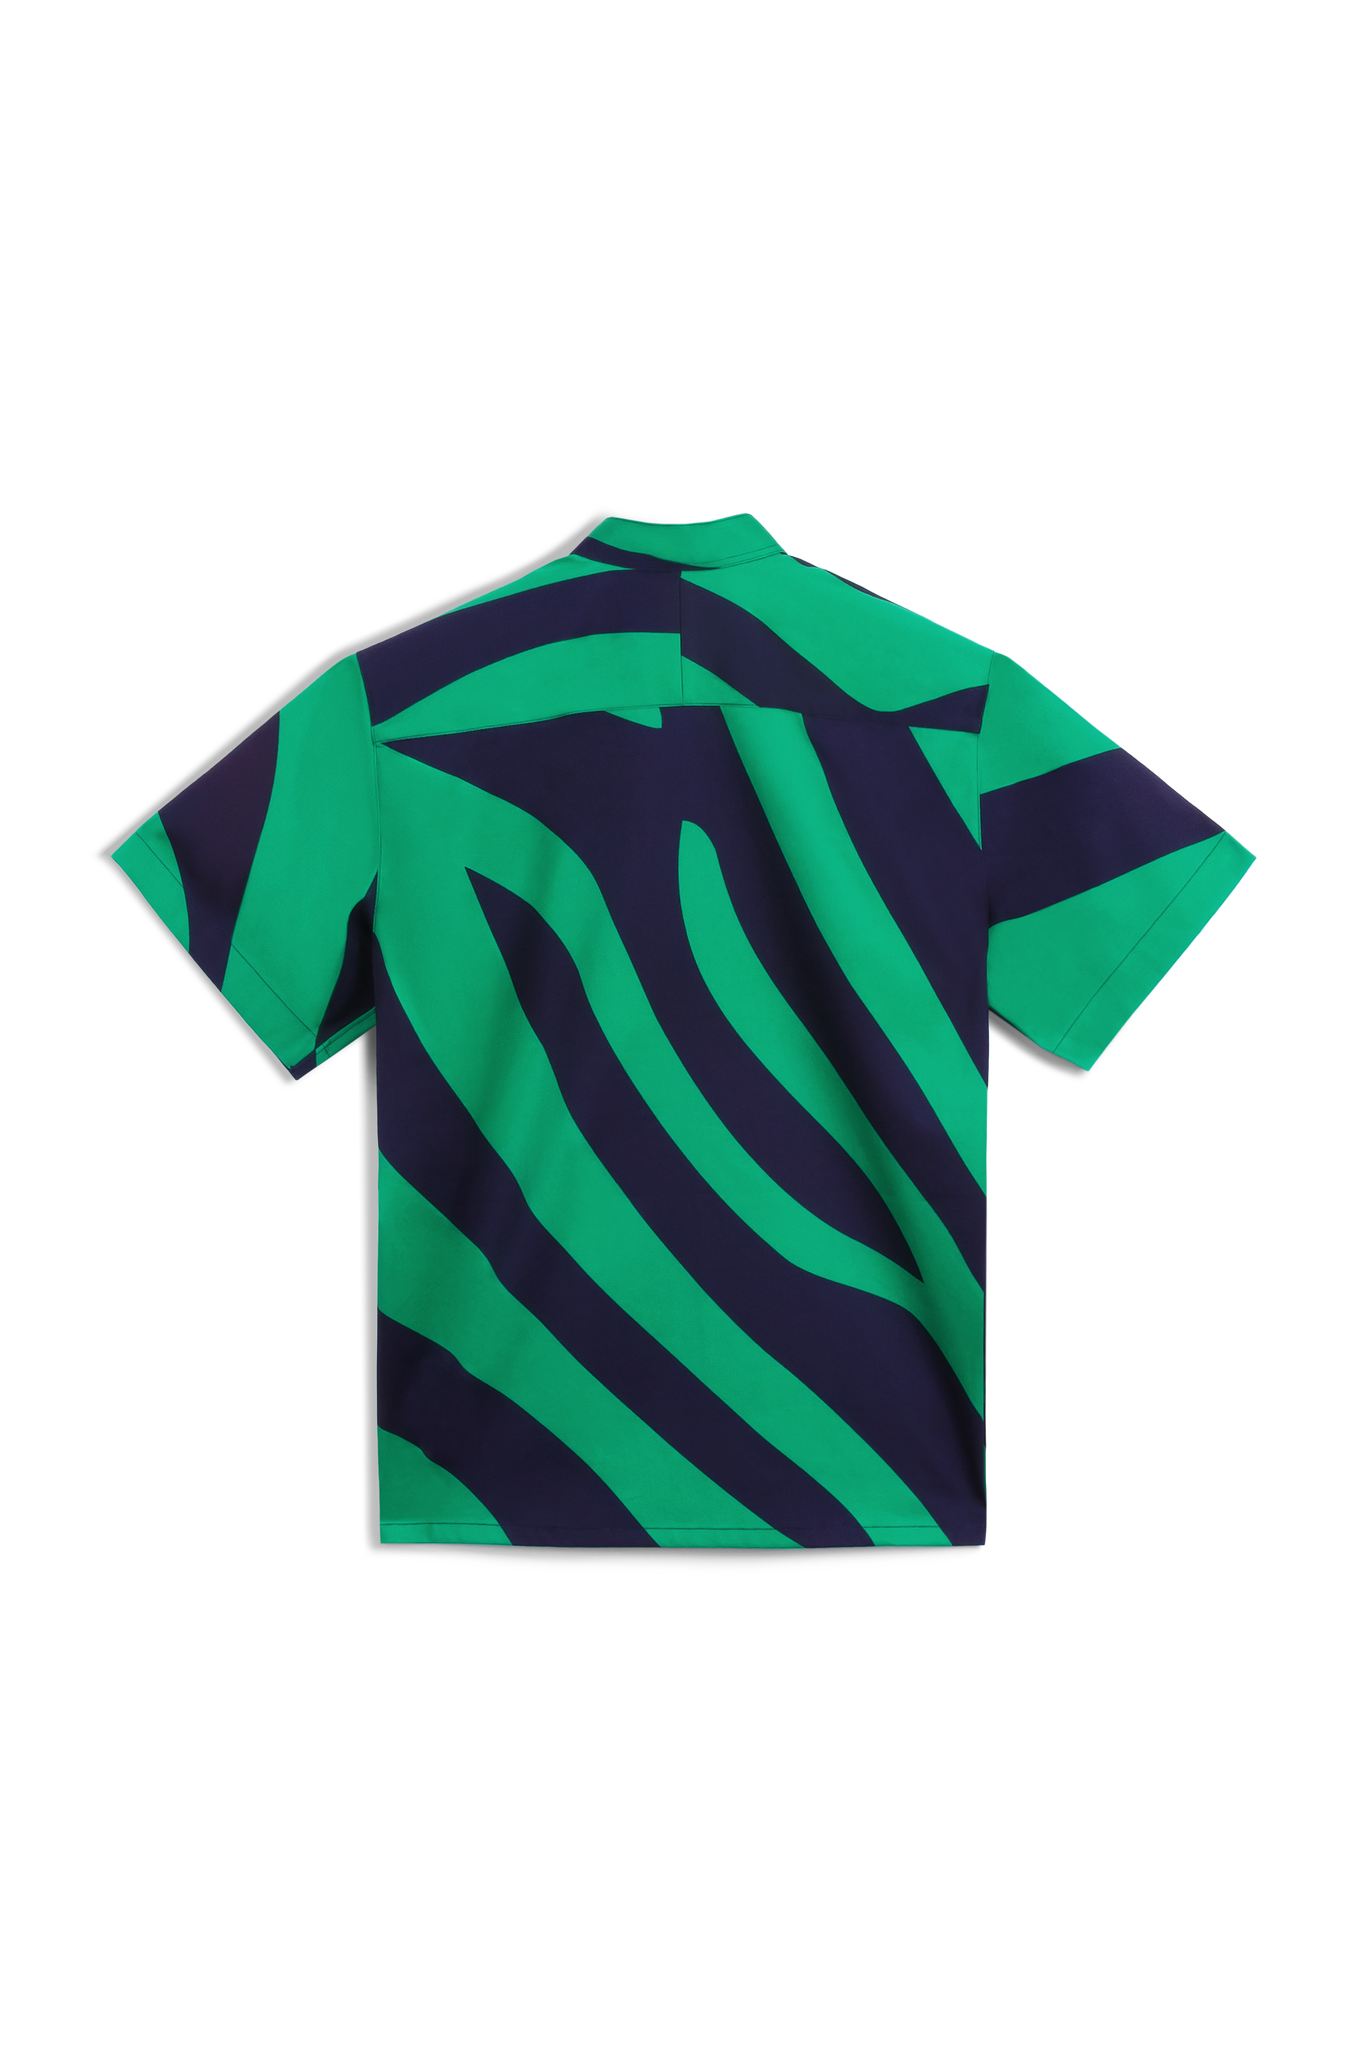 Zebra Printed Shirt - Green